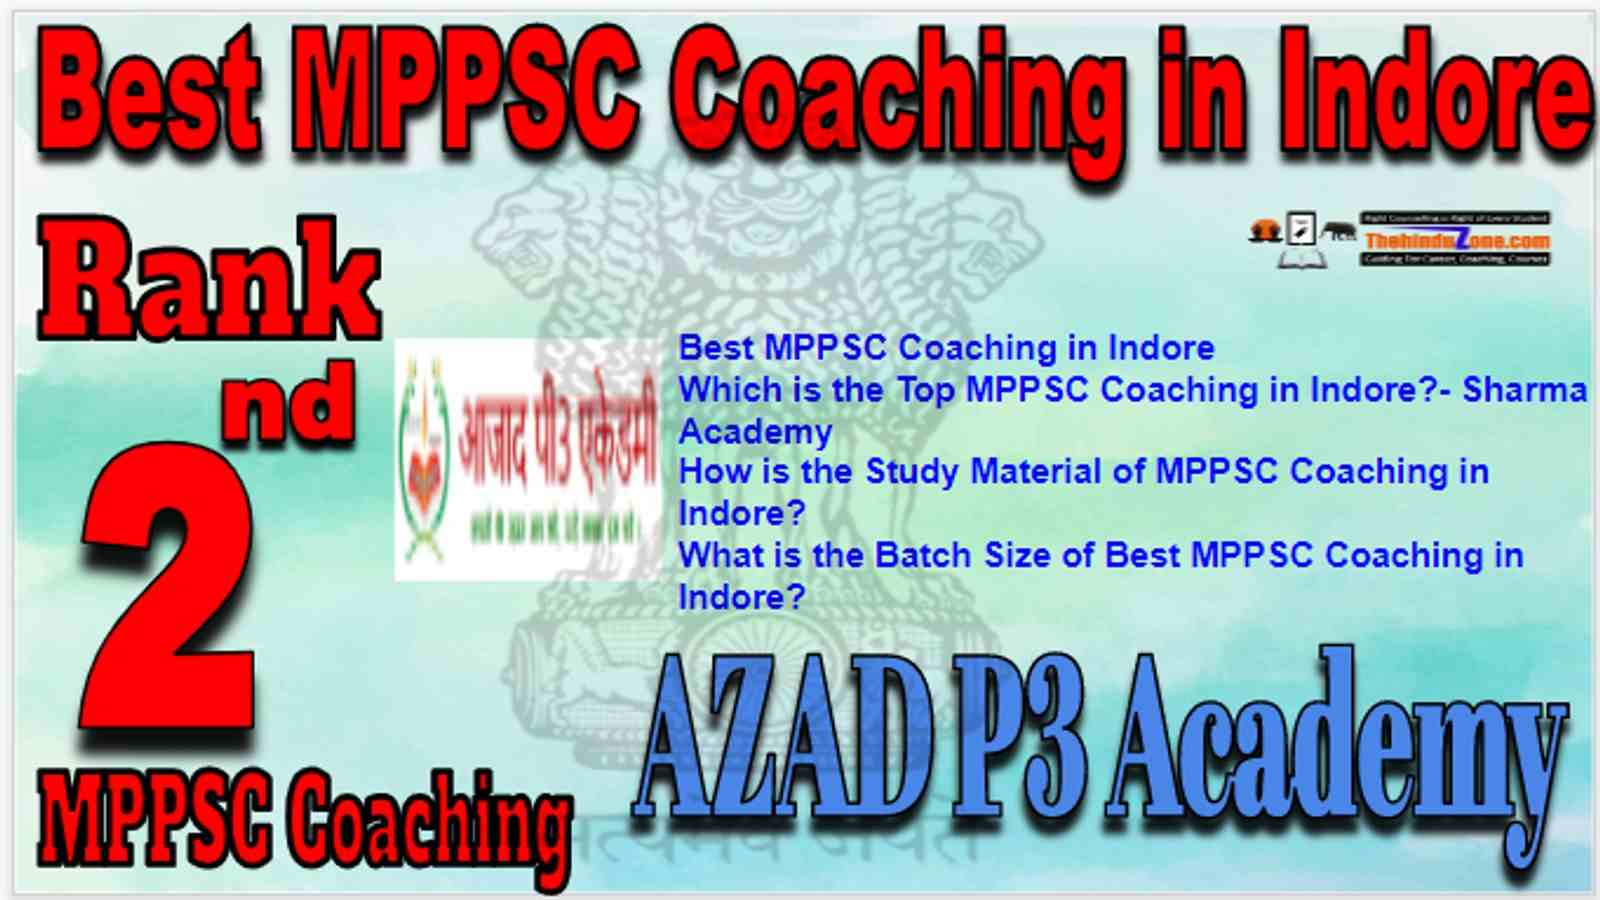 Best MPPSC Coaching in Indore. Rank 2 best MPPSC Coaching in Indore. Best Faculty in Azad P3 Academy. Top MPPSC Coaching in Indore.